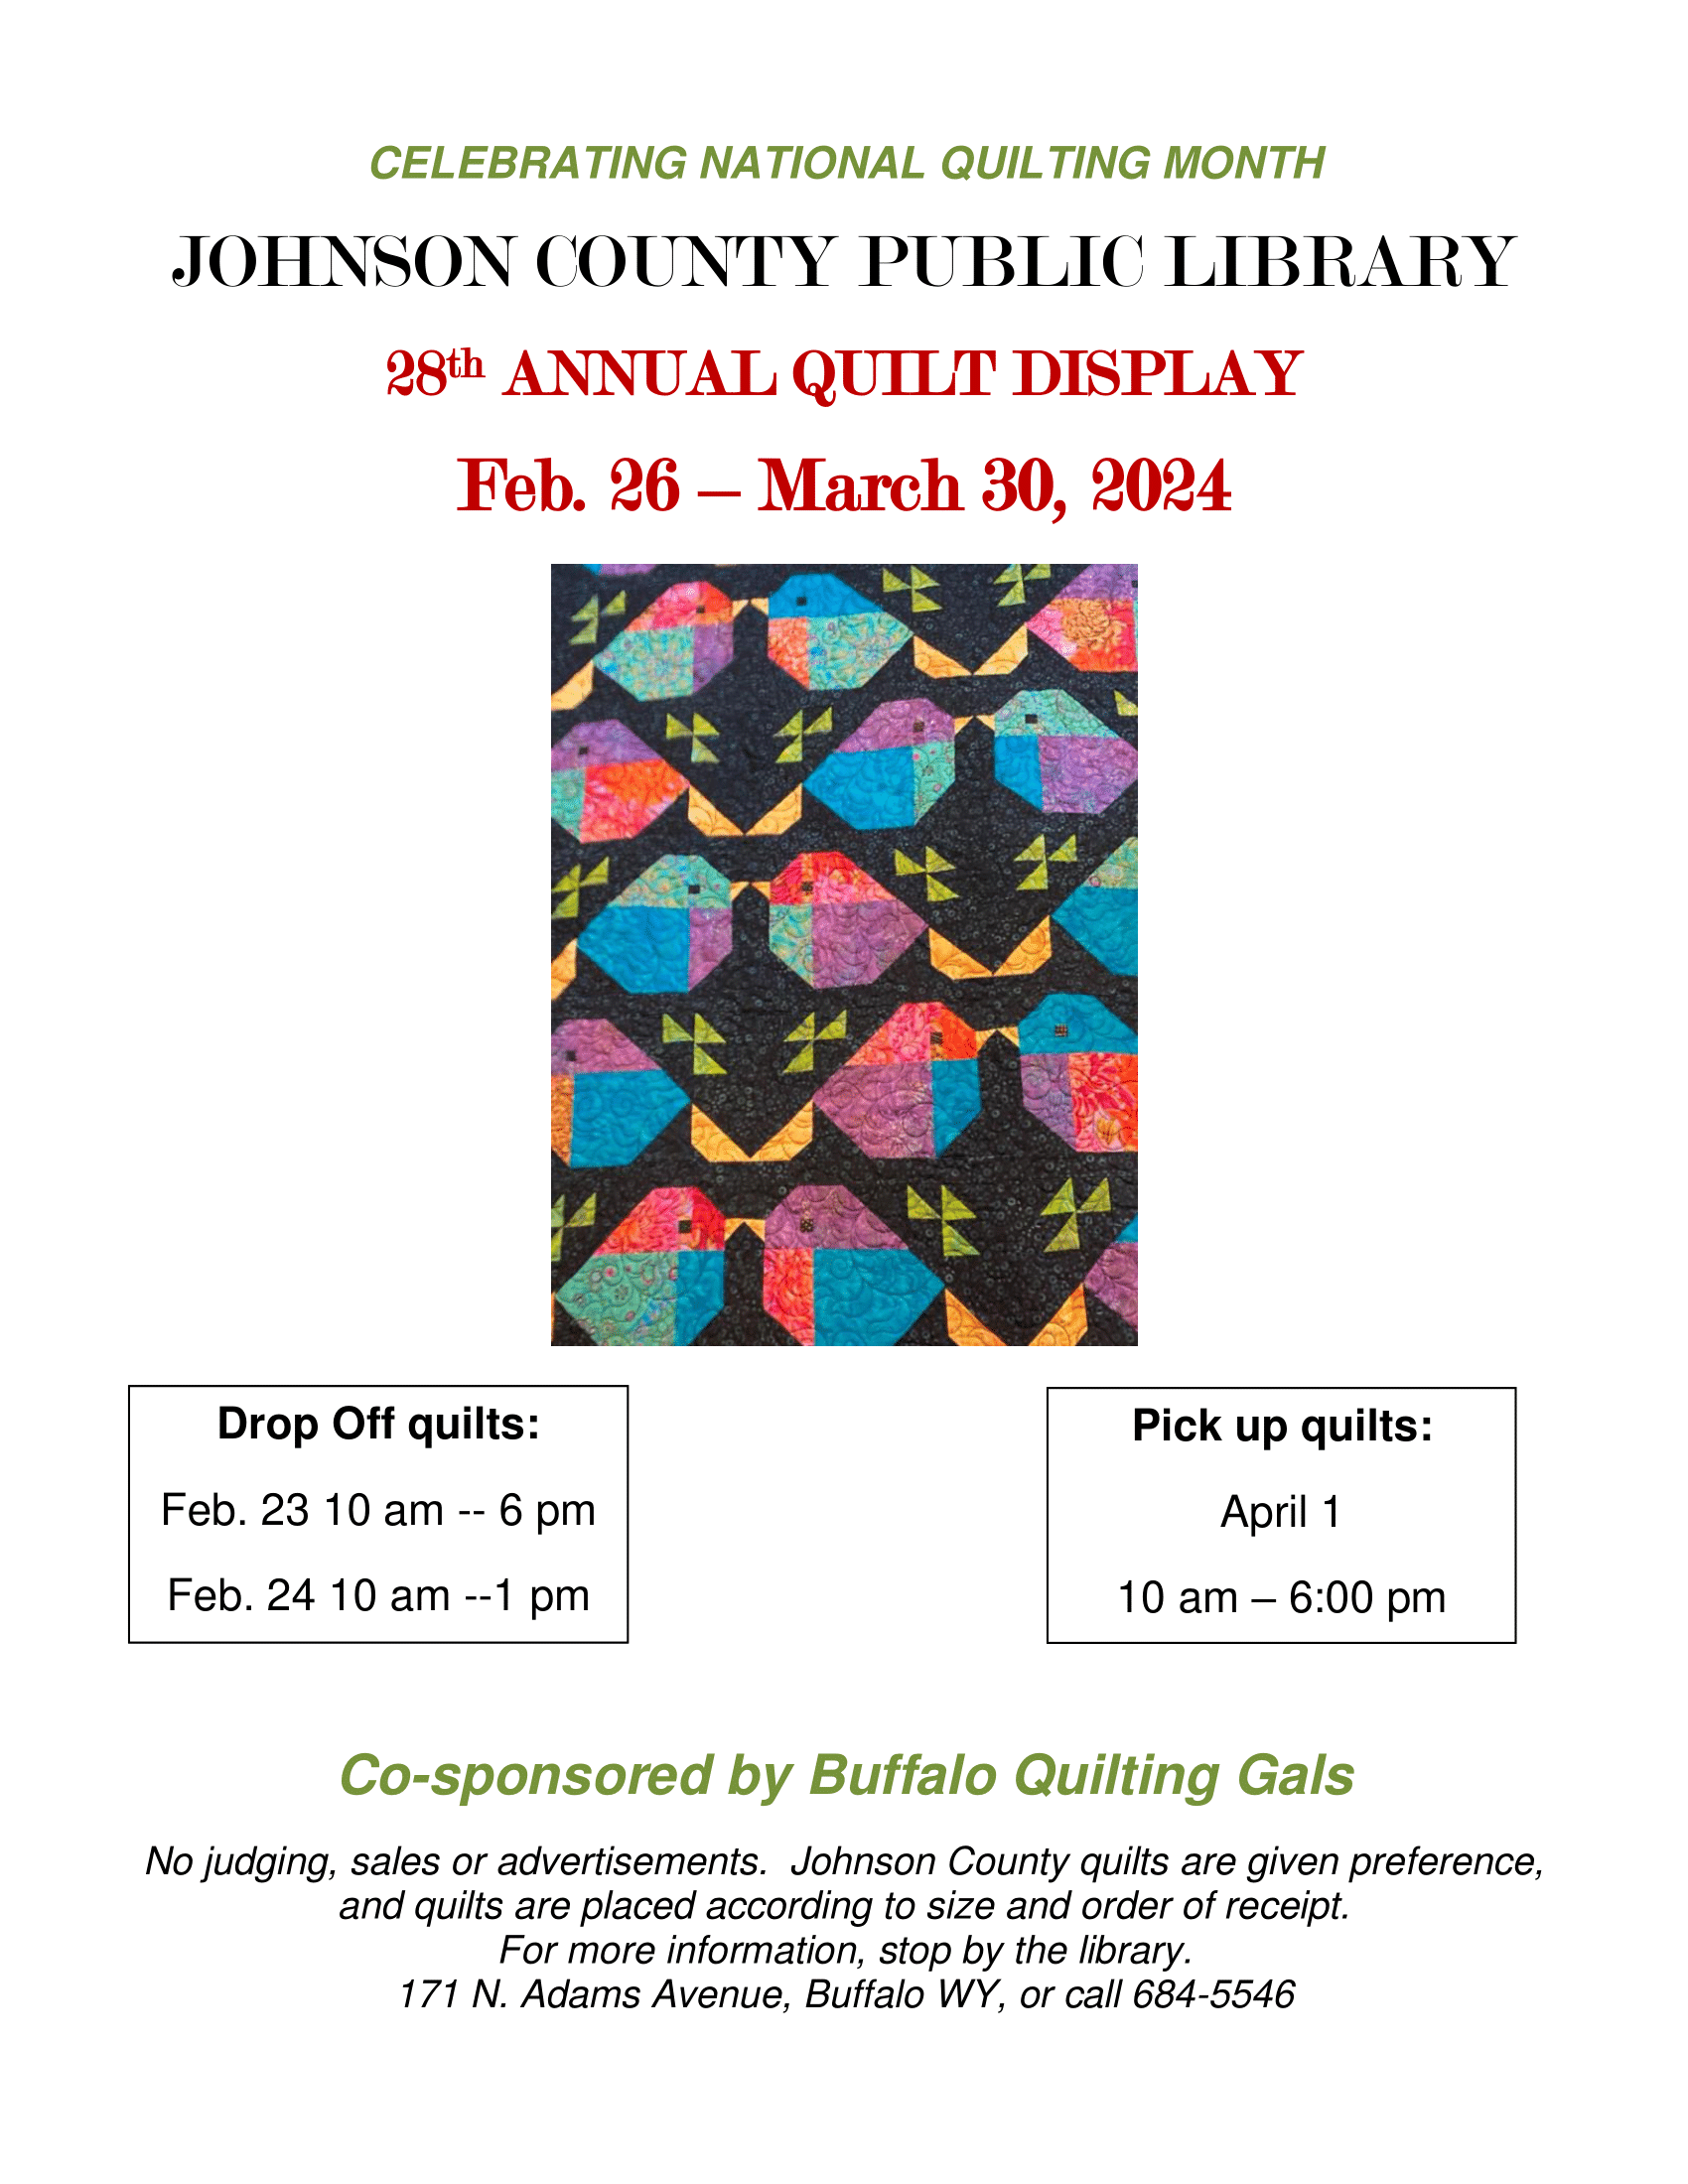 28th Annual Quilt Display Feb. 26-Mar. 30, 2024 Image